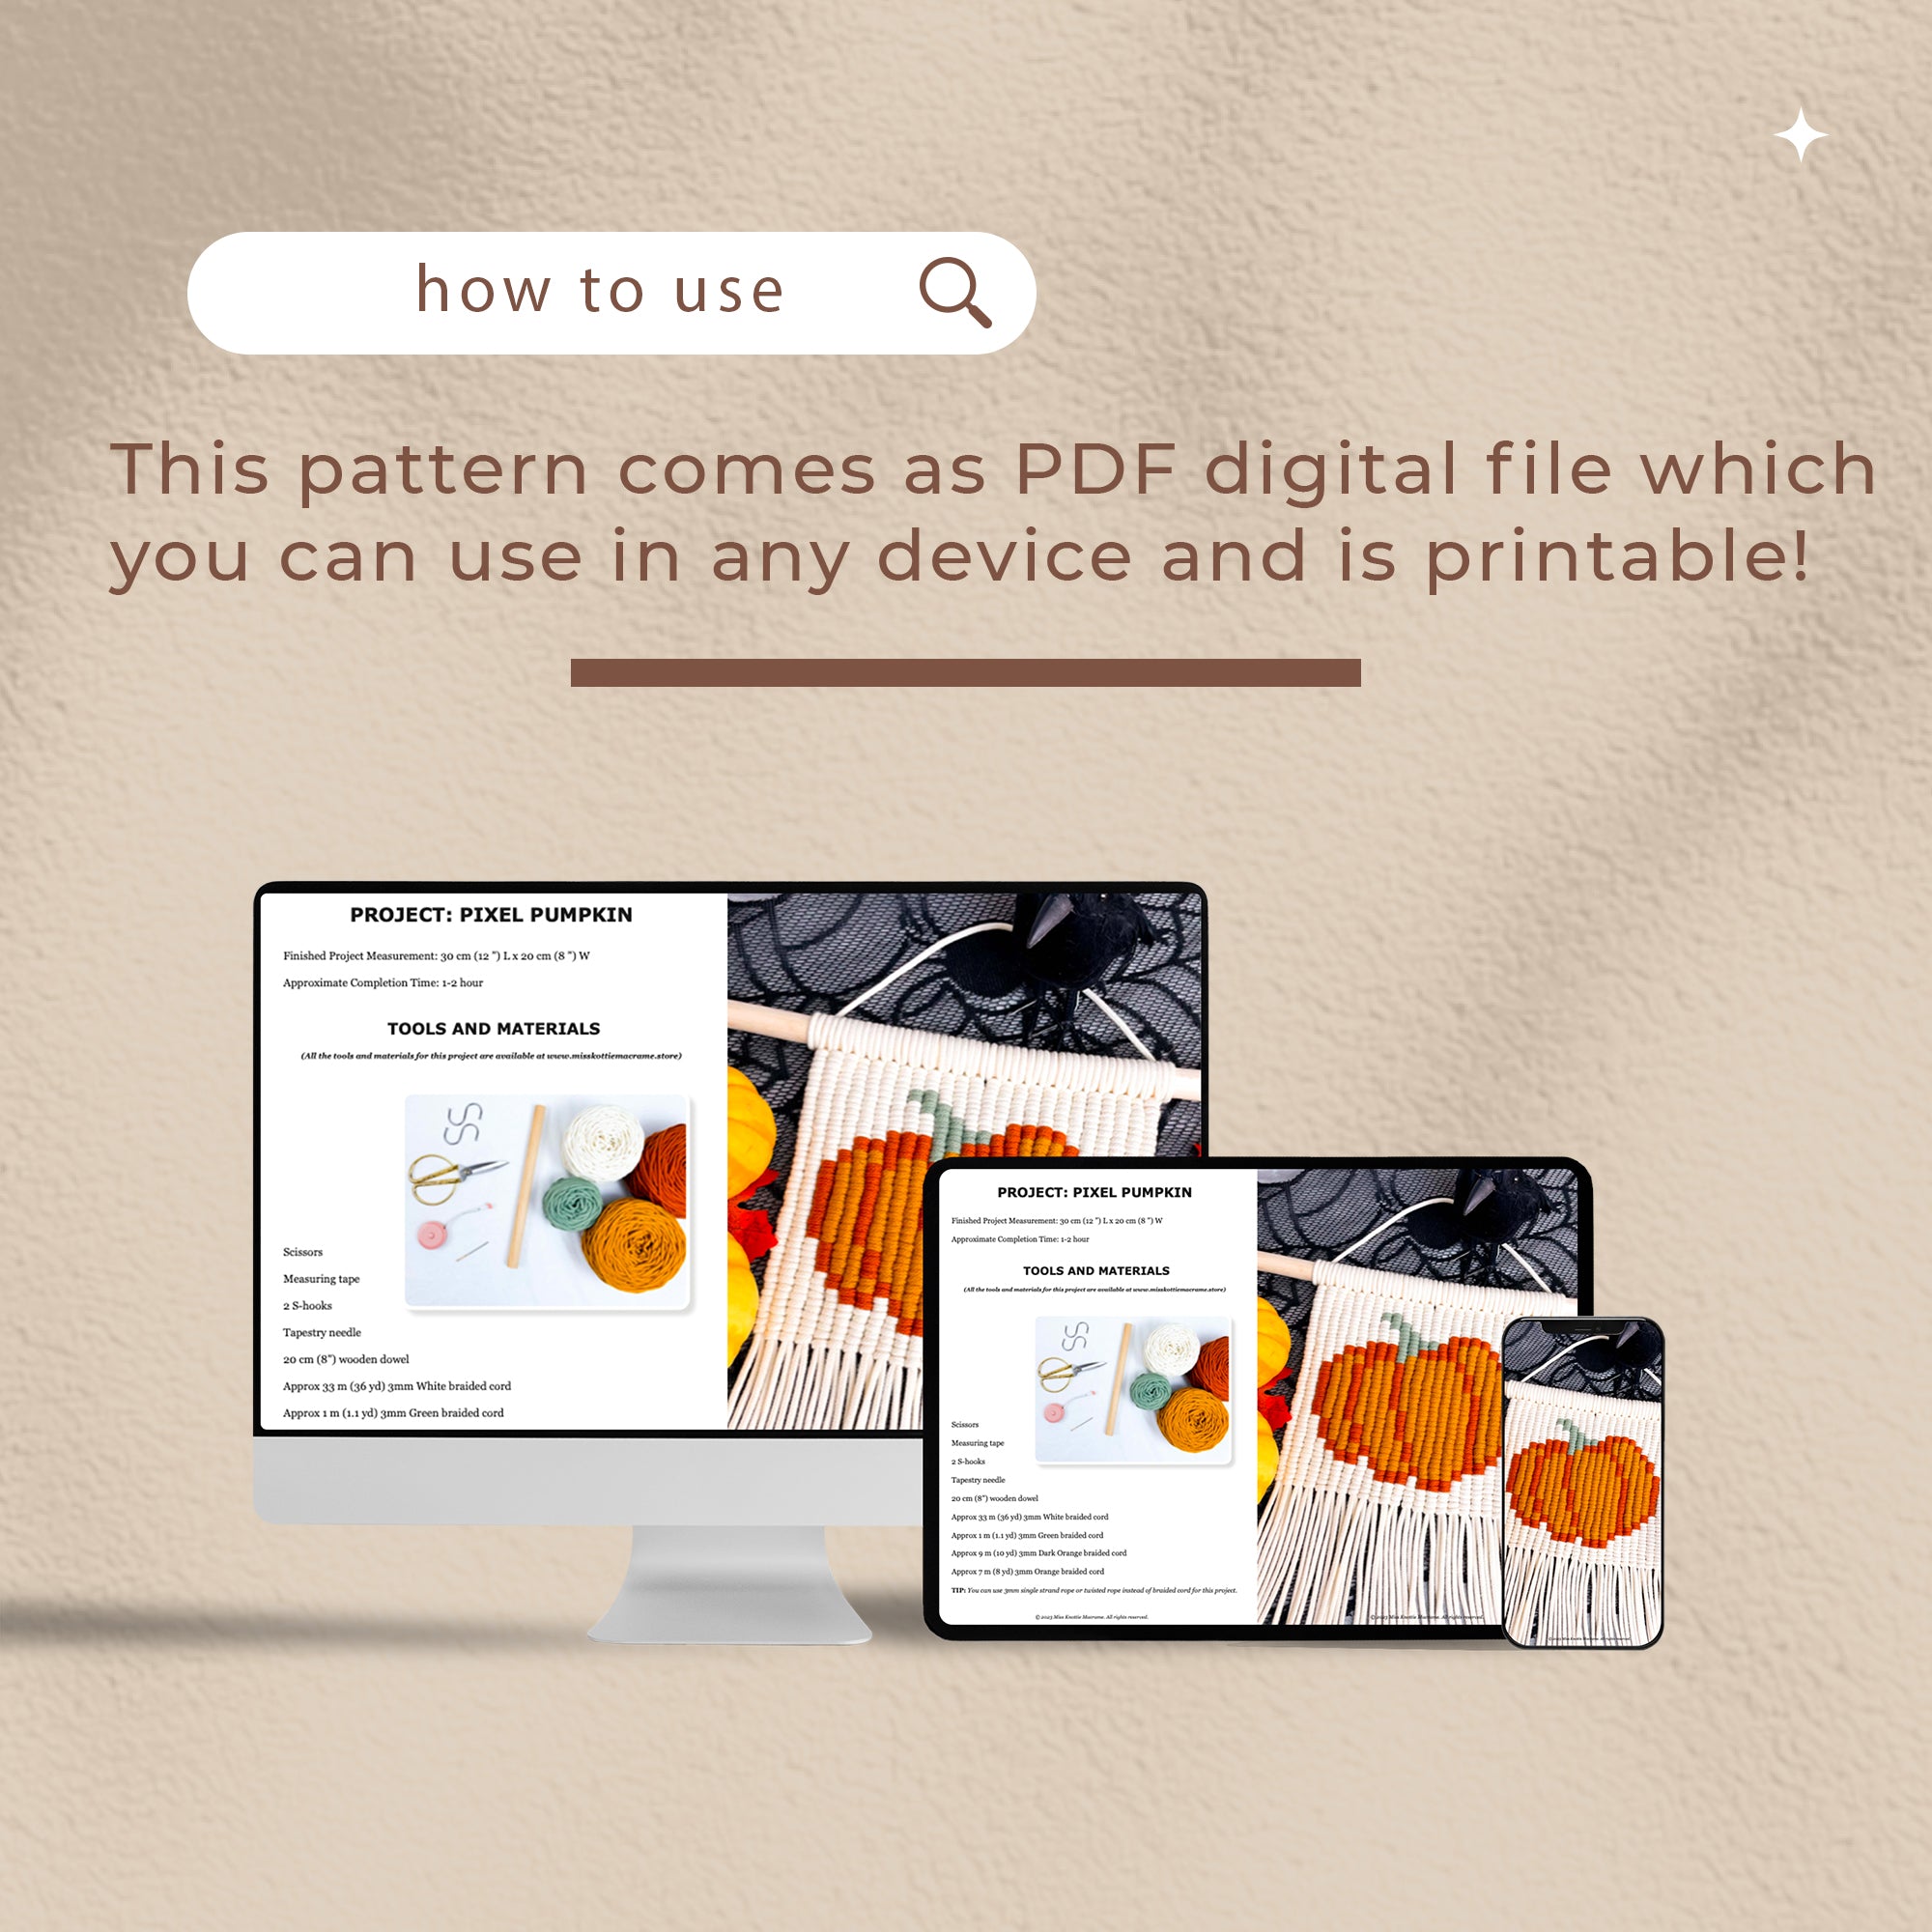 Pumpkin Pixel Pattern - Digital PDF and Knot Guide